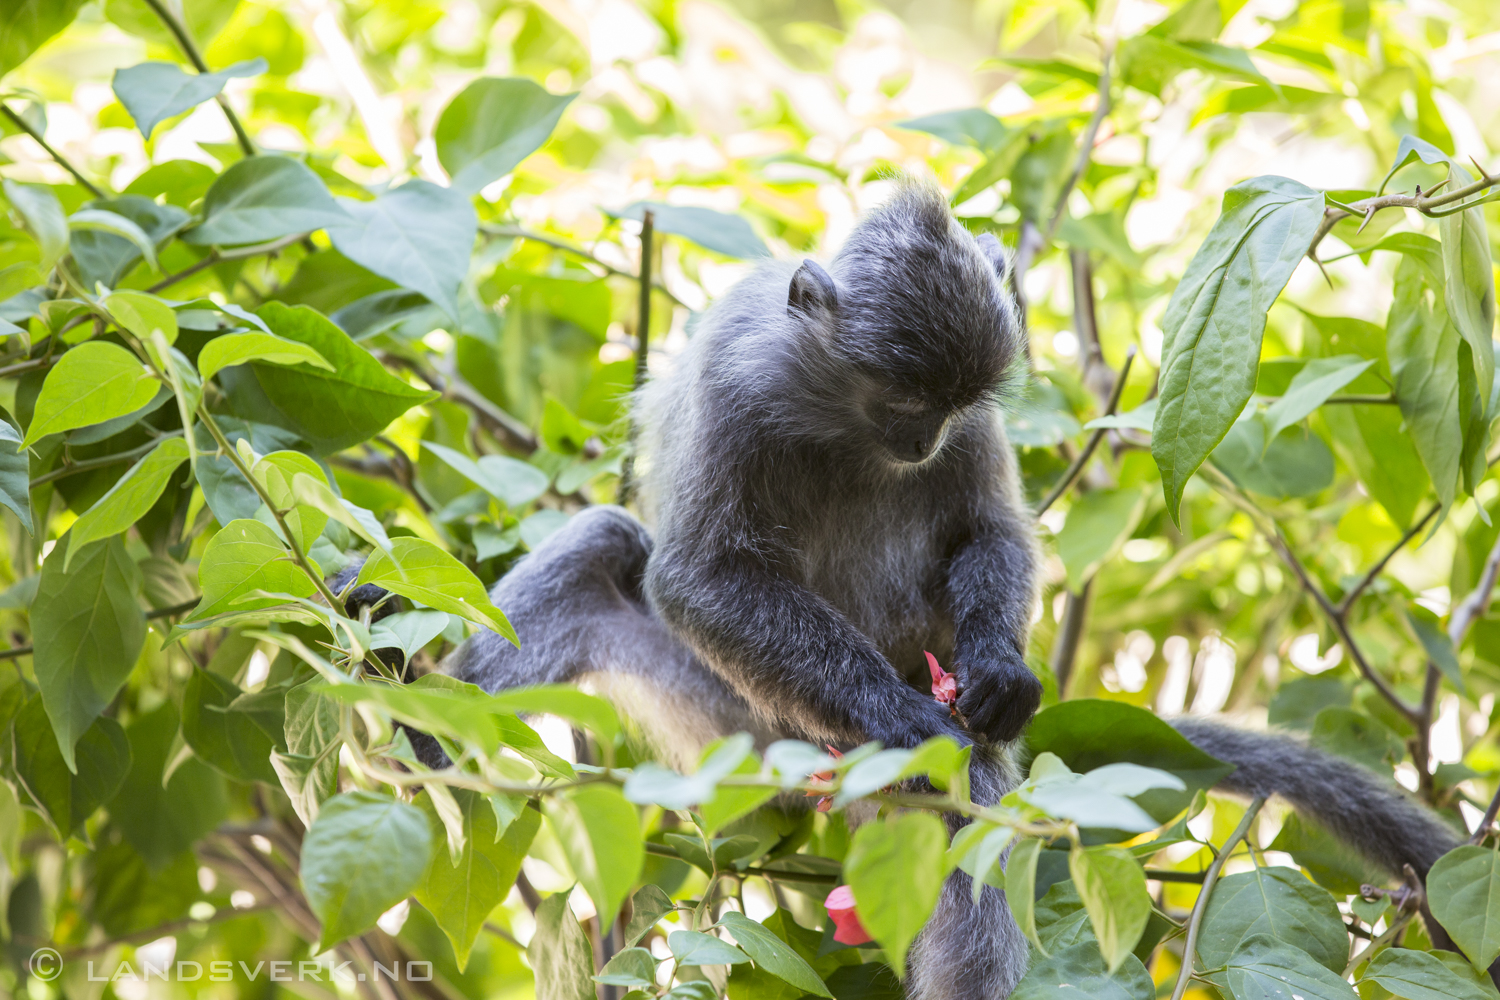 Wild Silver Leaf monkey. Kota Kinabatangan, Borneo.

(Canon EOS 5D Mark III / Canon EF 70-200mm f/2.8 L IS II USM)